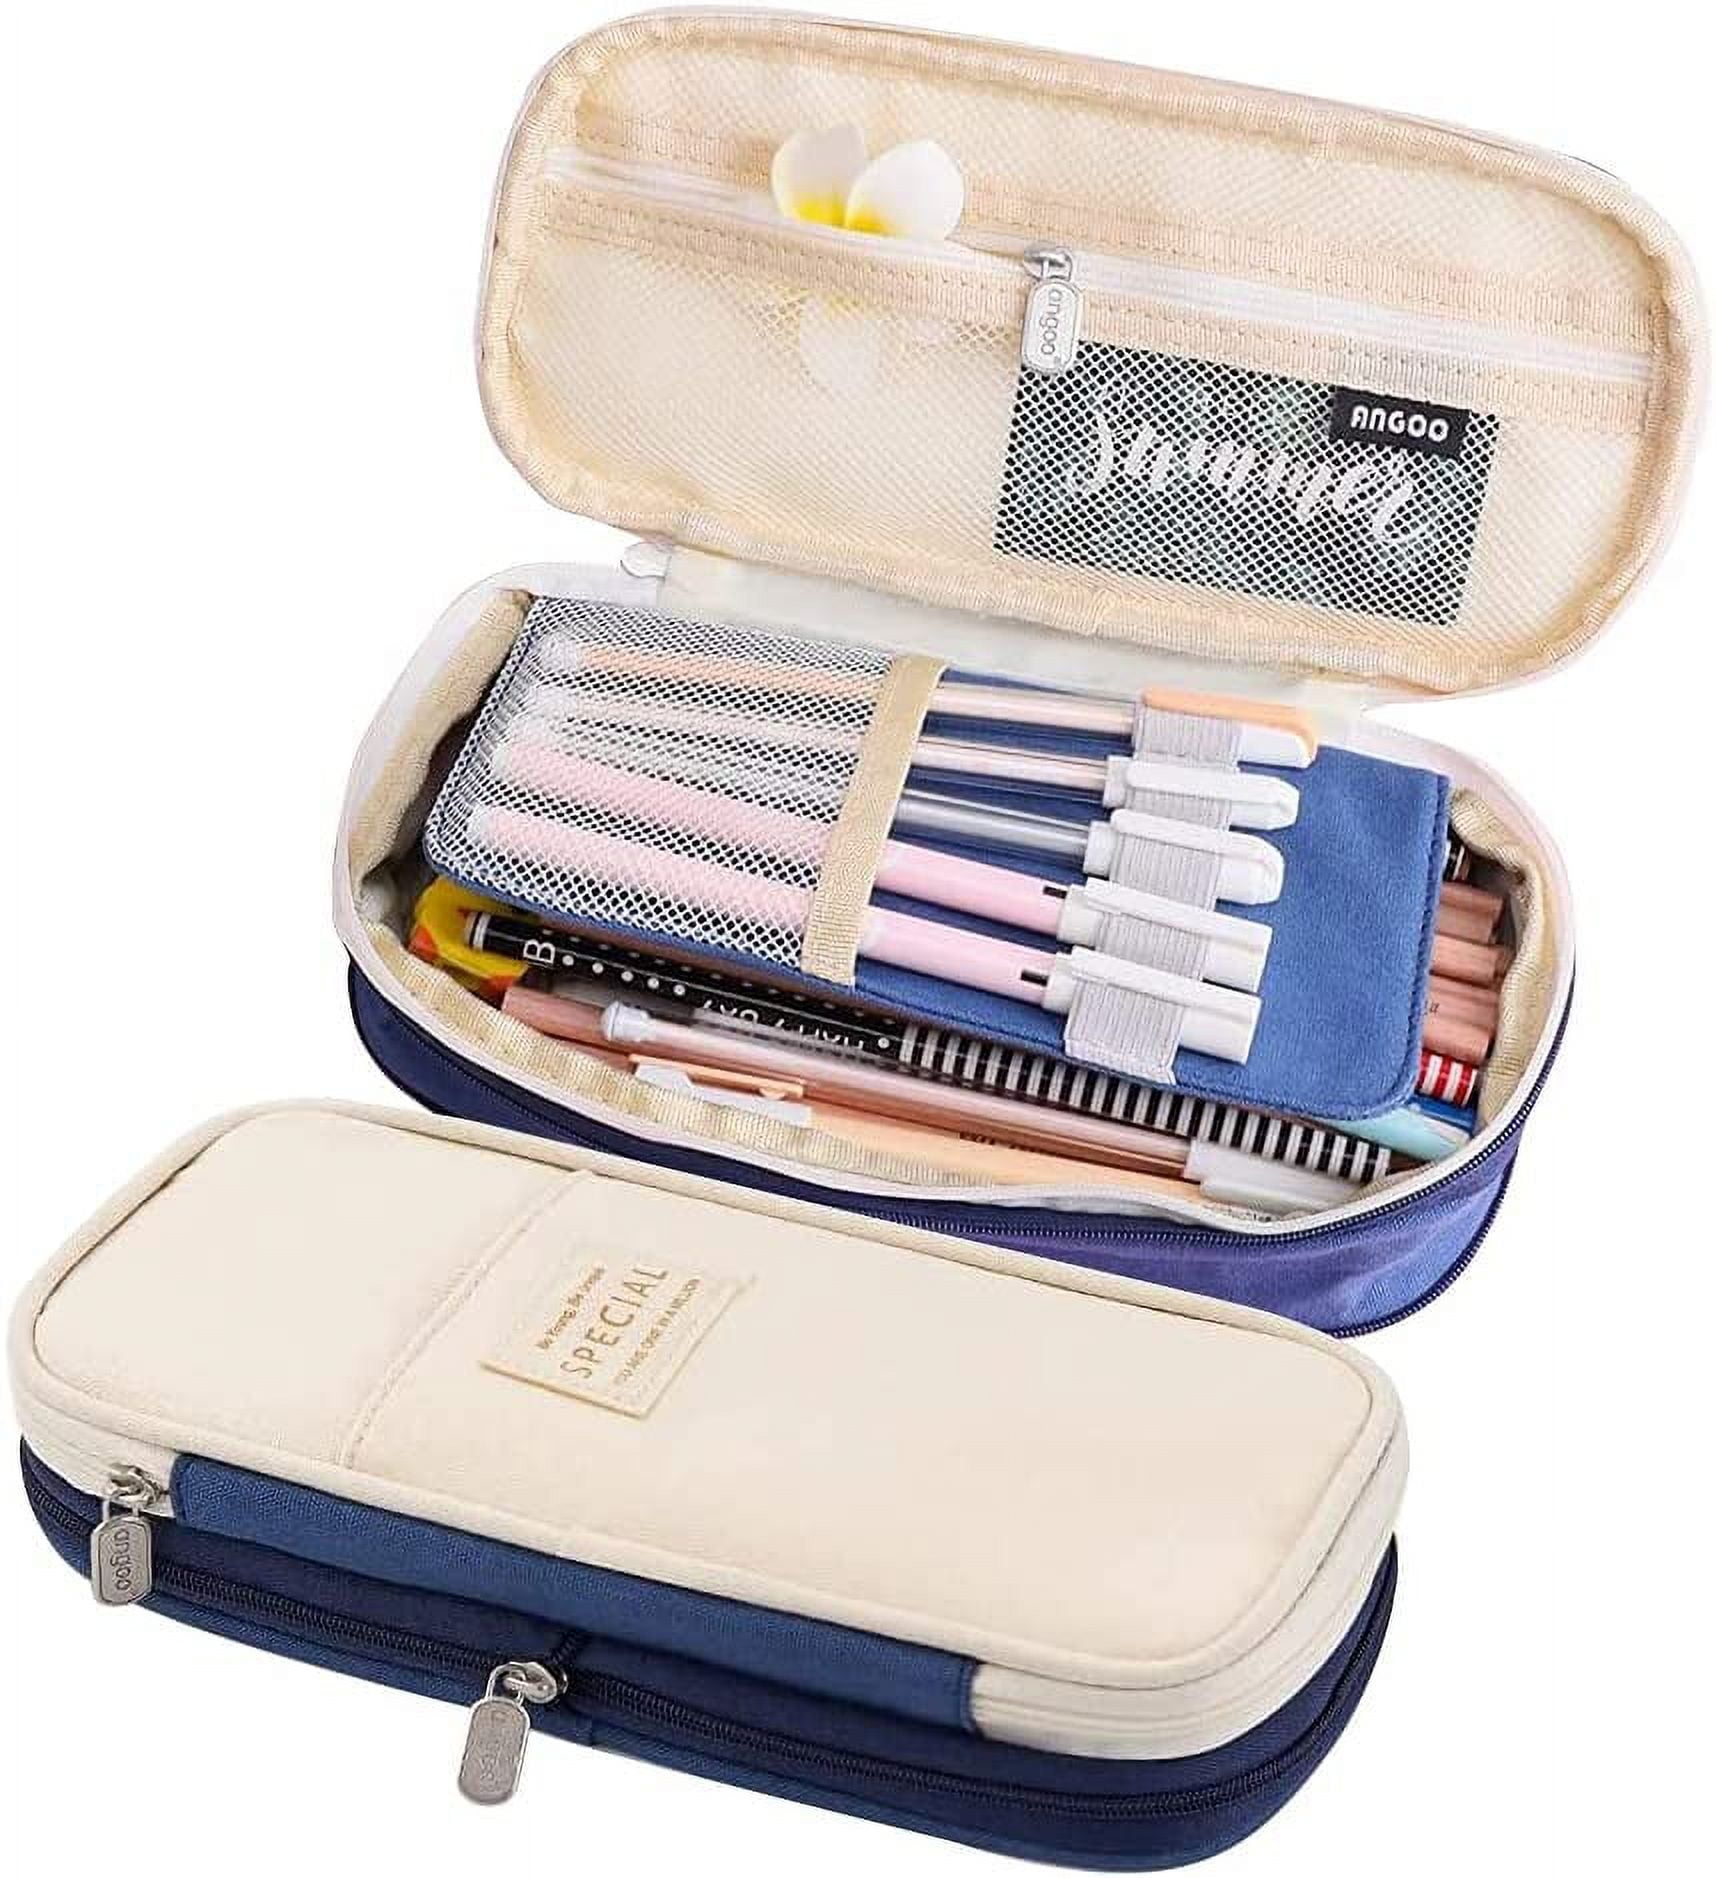  Gloppie Pencil Case Pencil Box Pen Case Organizer Portable  Pencil Bags with Zipper Pencil Pouches Stationary Storage Box Blue : Office  Products